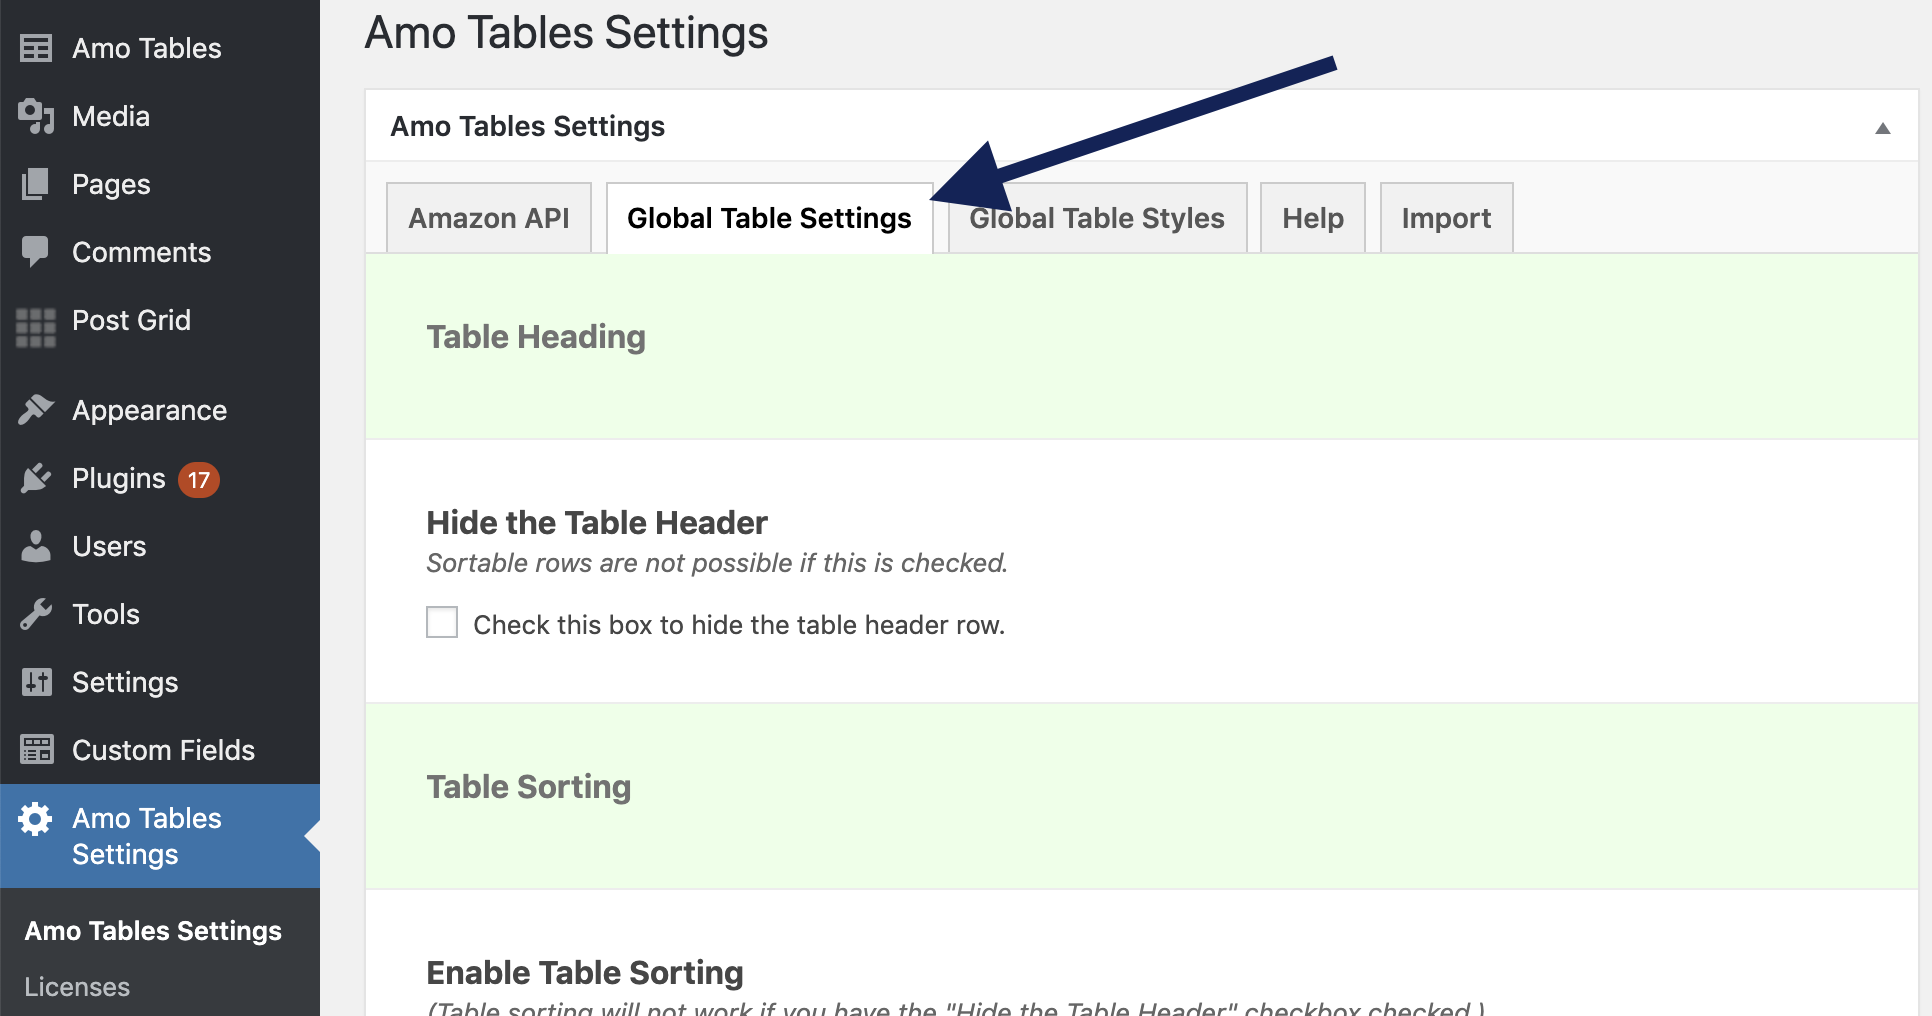 Amo Tables Global Settings